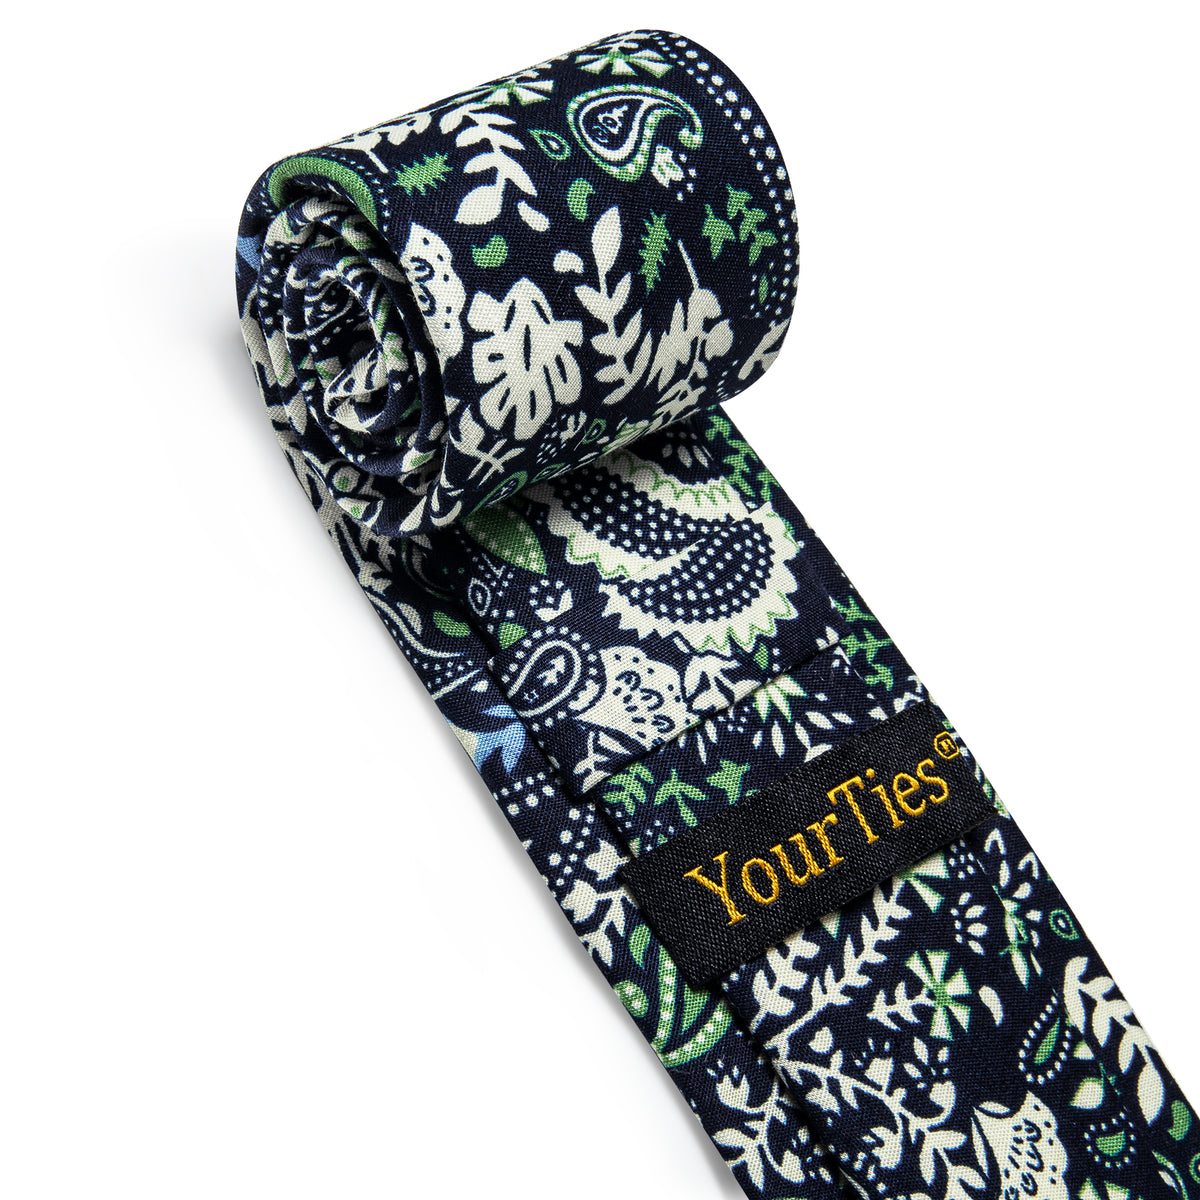 Black Green Paisley Printed Skinny Tie Set with Tie Clip